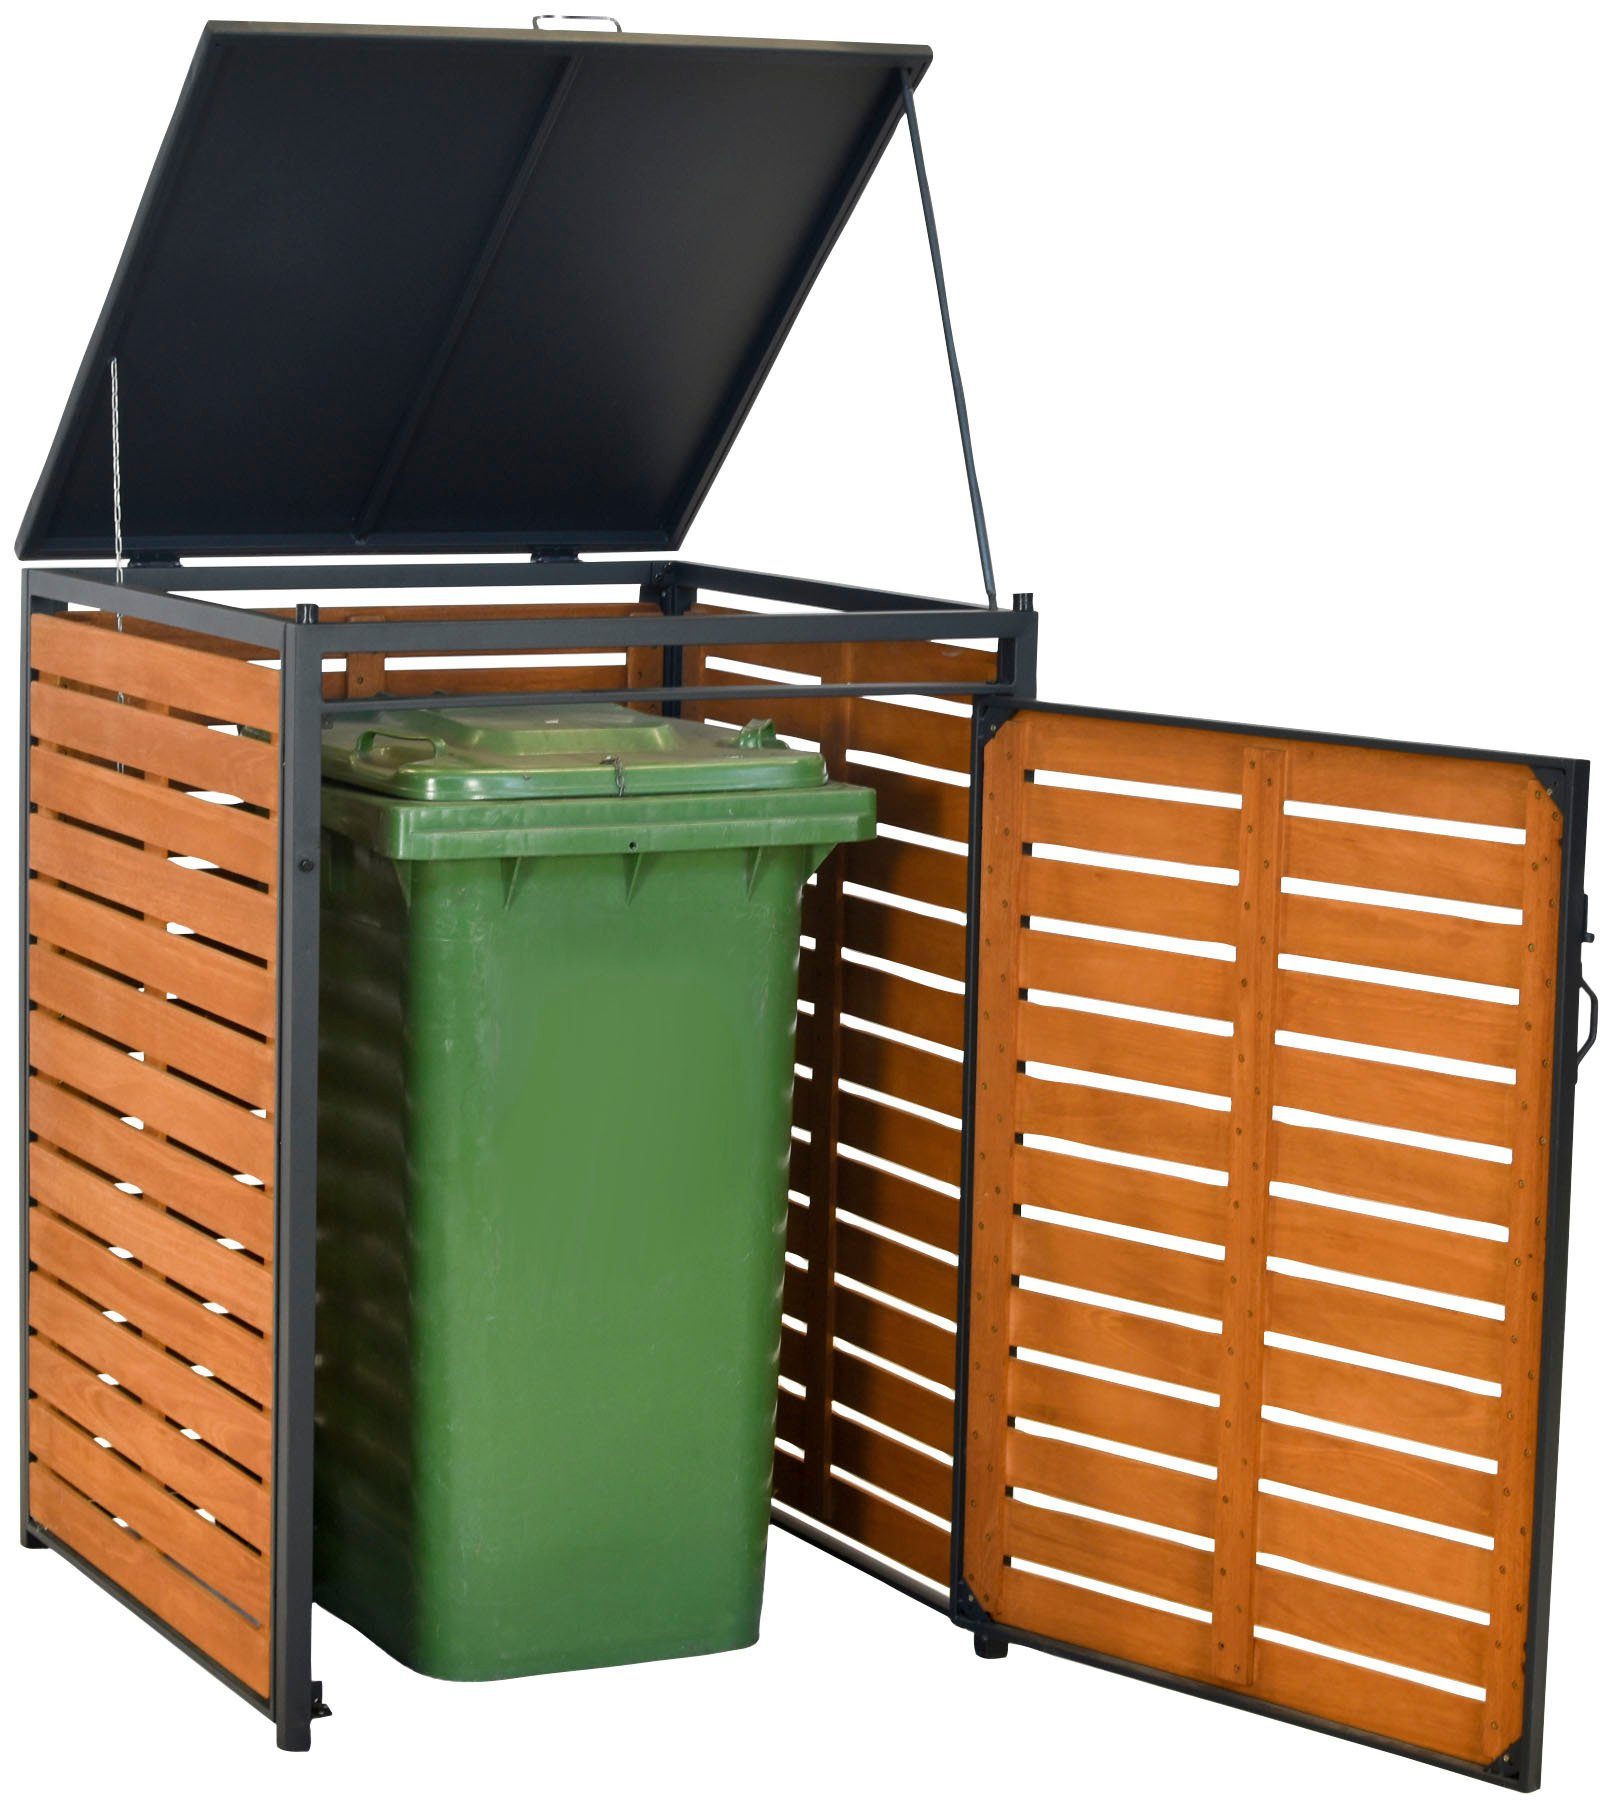 MERXX Mülltonnenbox Basis Alu/Eukalyptus, für 120 Liter Mülltonne